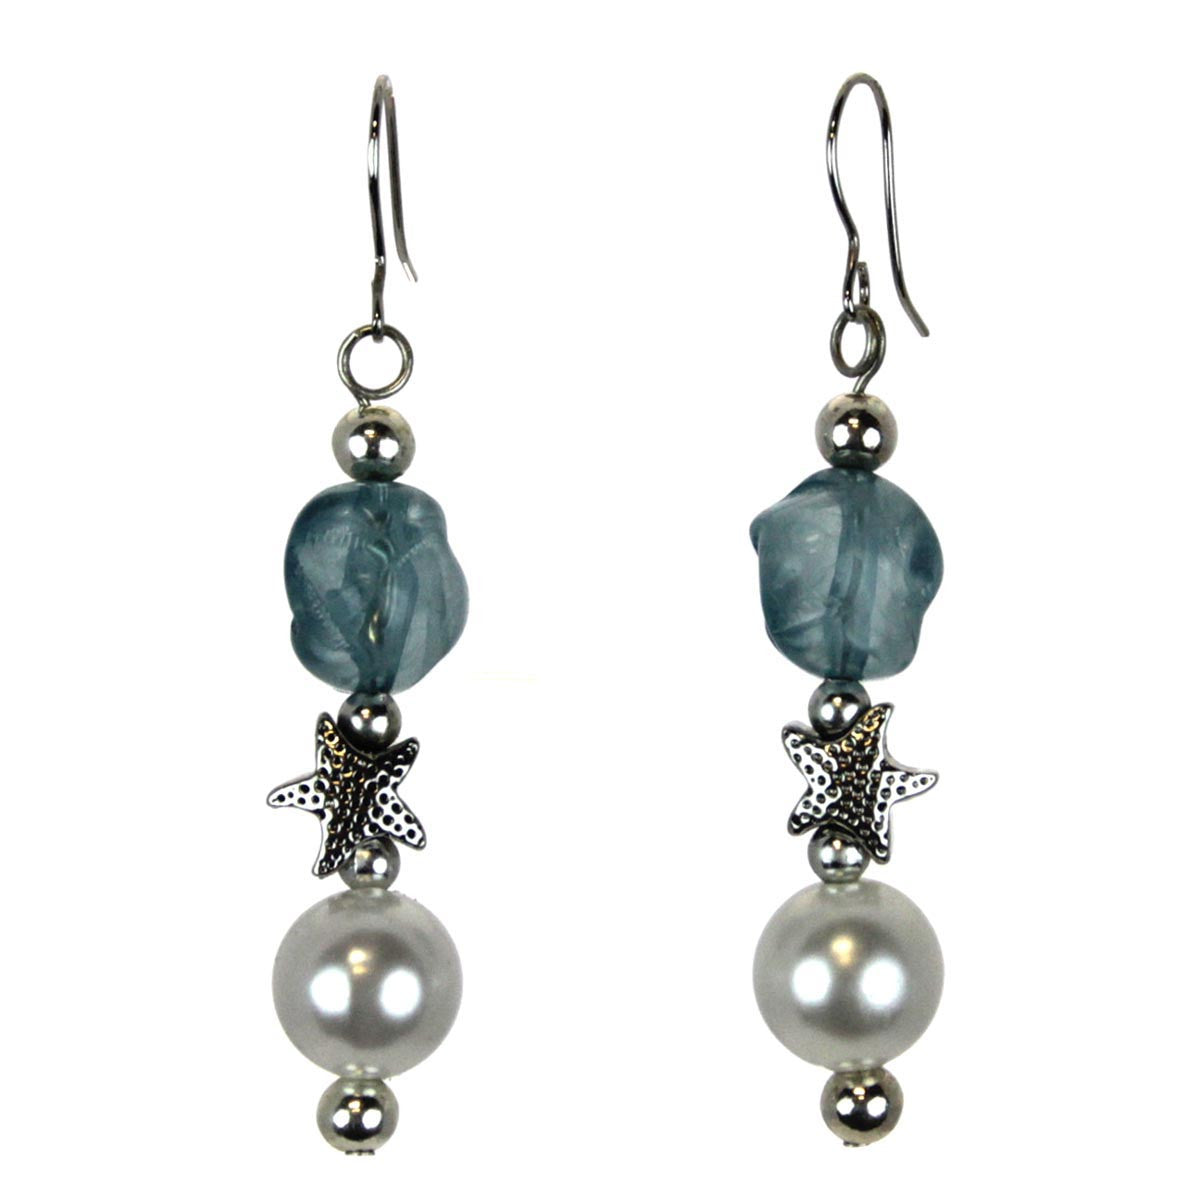 Starfish Earrings with Beads